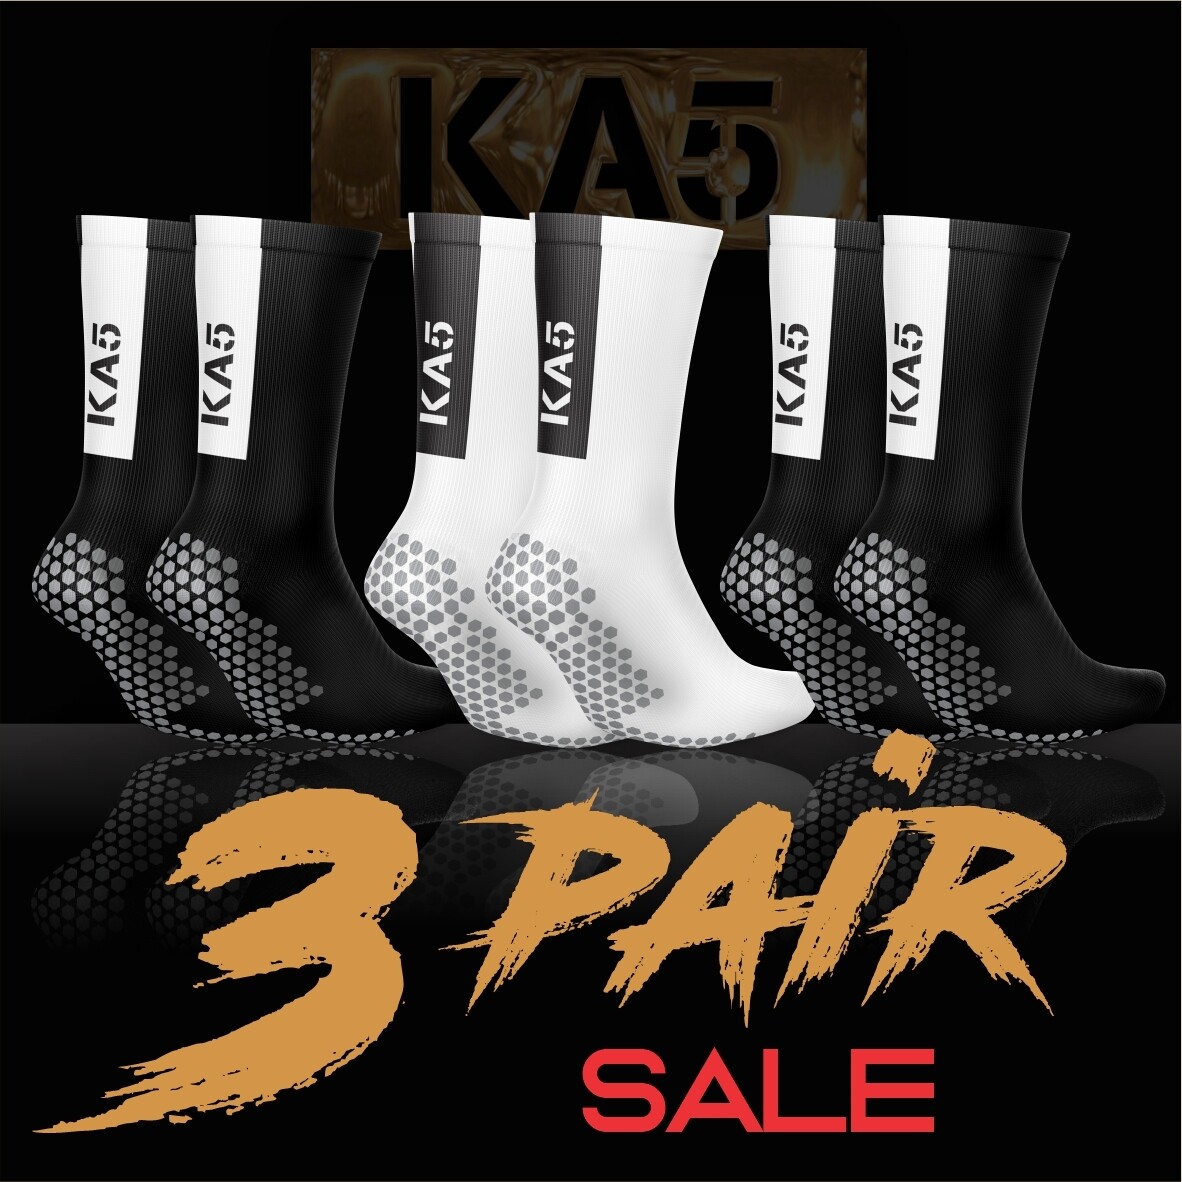 KA5 Traction + Performance Socks - 3 Pairs - Black or White